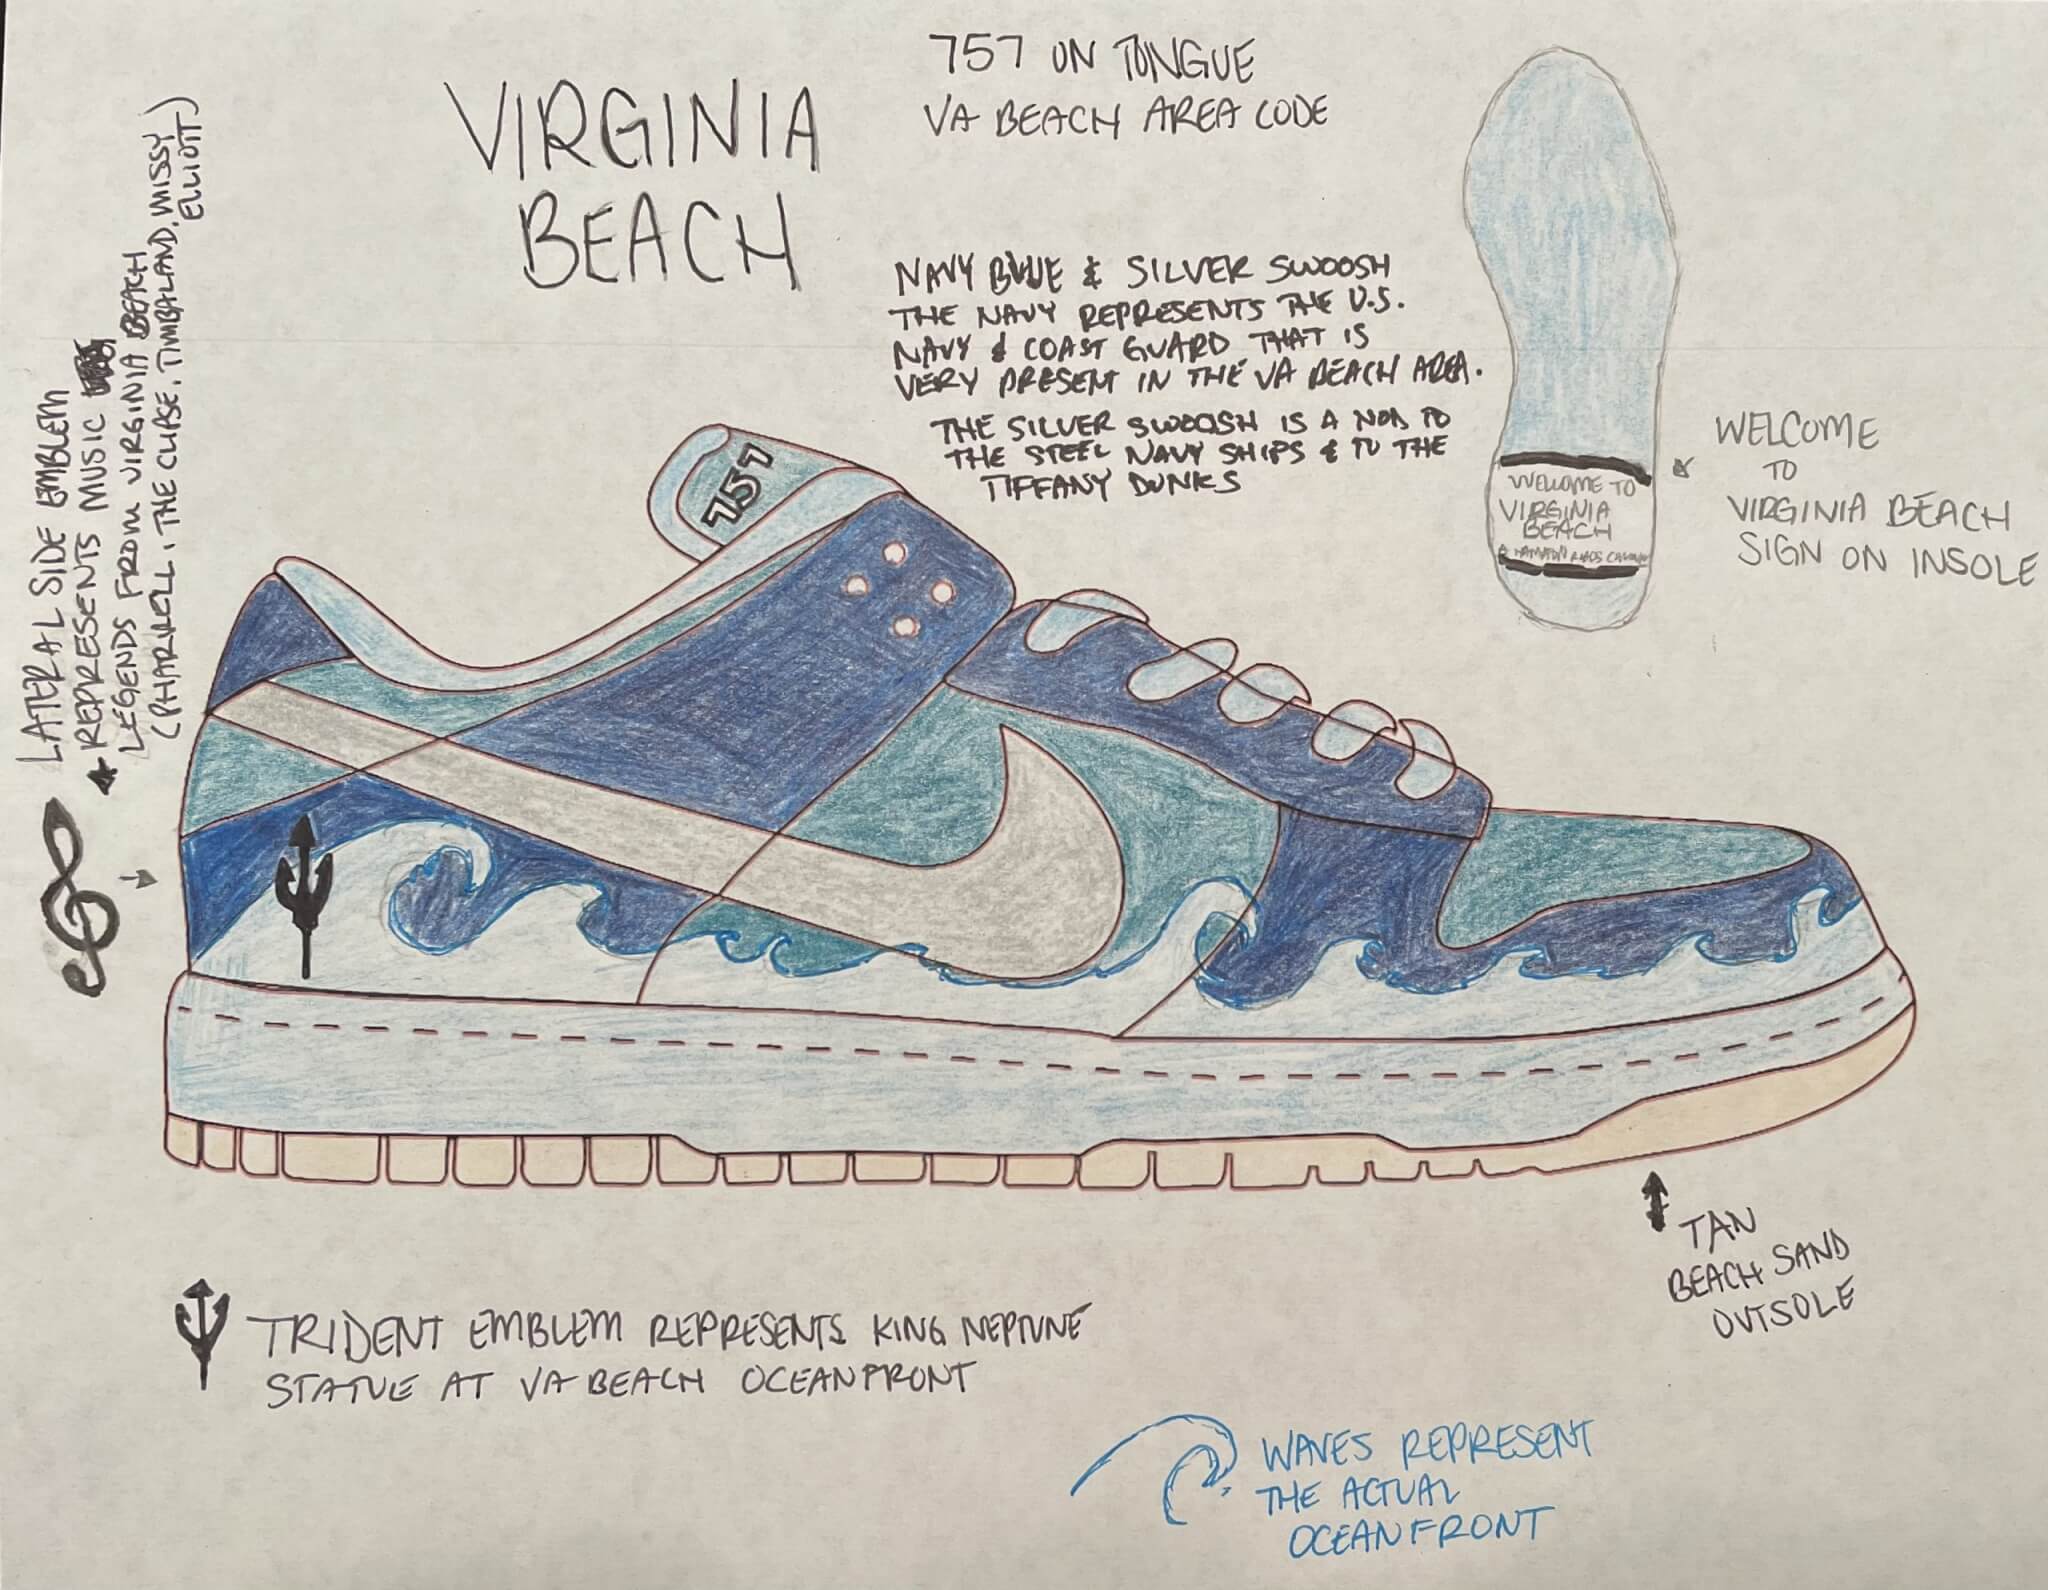 Coast Guard yeoman wins Instagram contest with Virginia Beach-themed shoe design